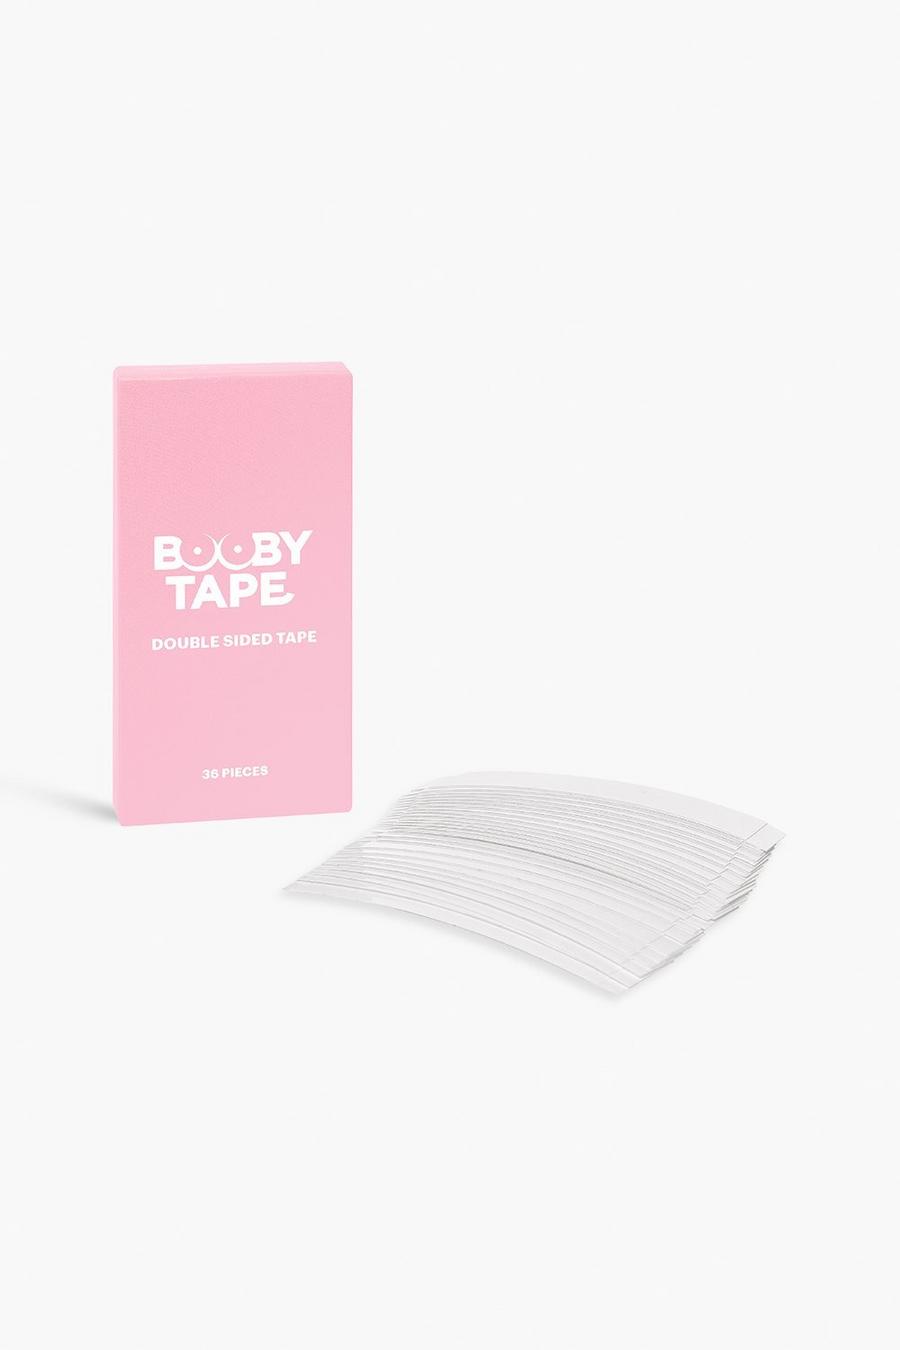 Booby Tape - Nastro sostitutivo reggiseno biadesivo - 36 pz., Pink rosa